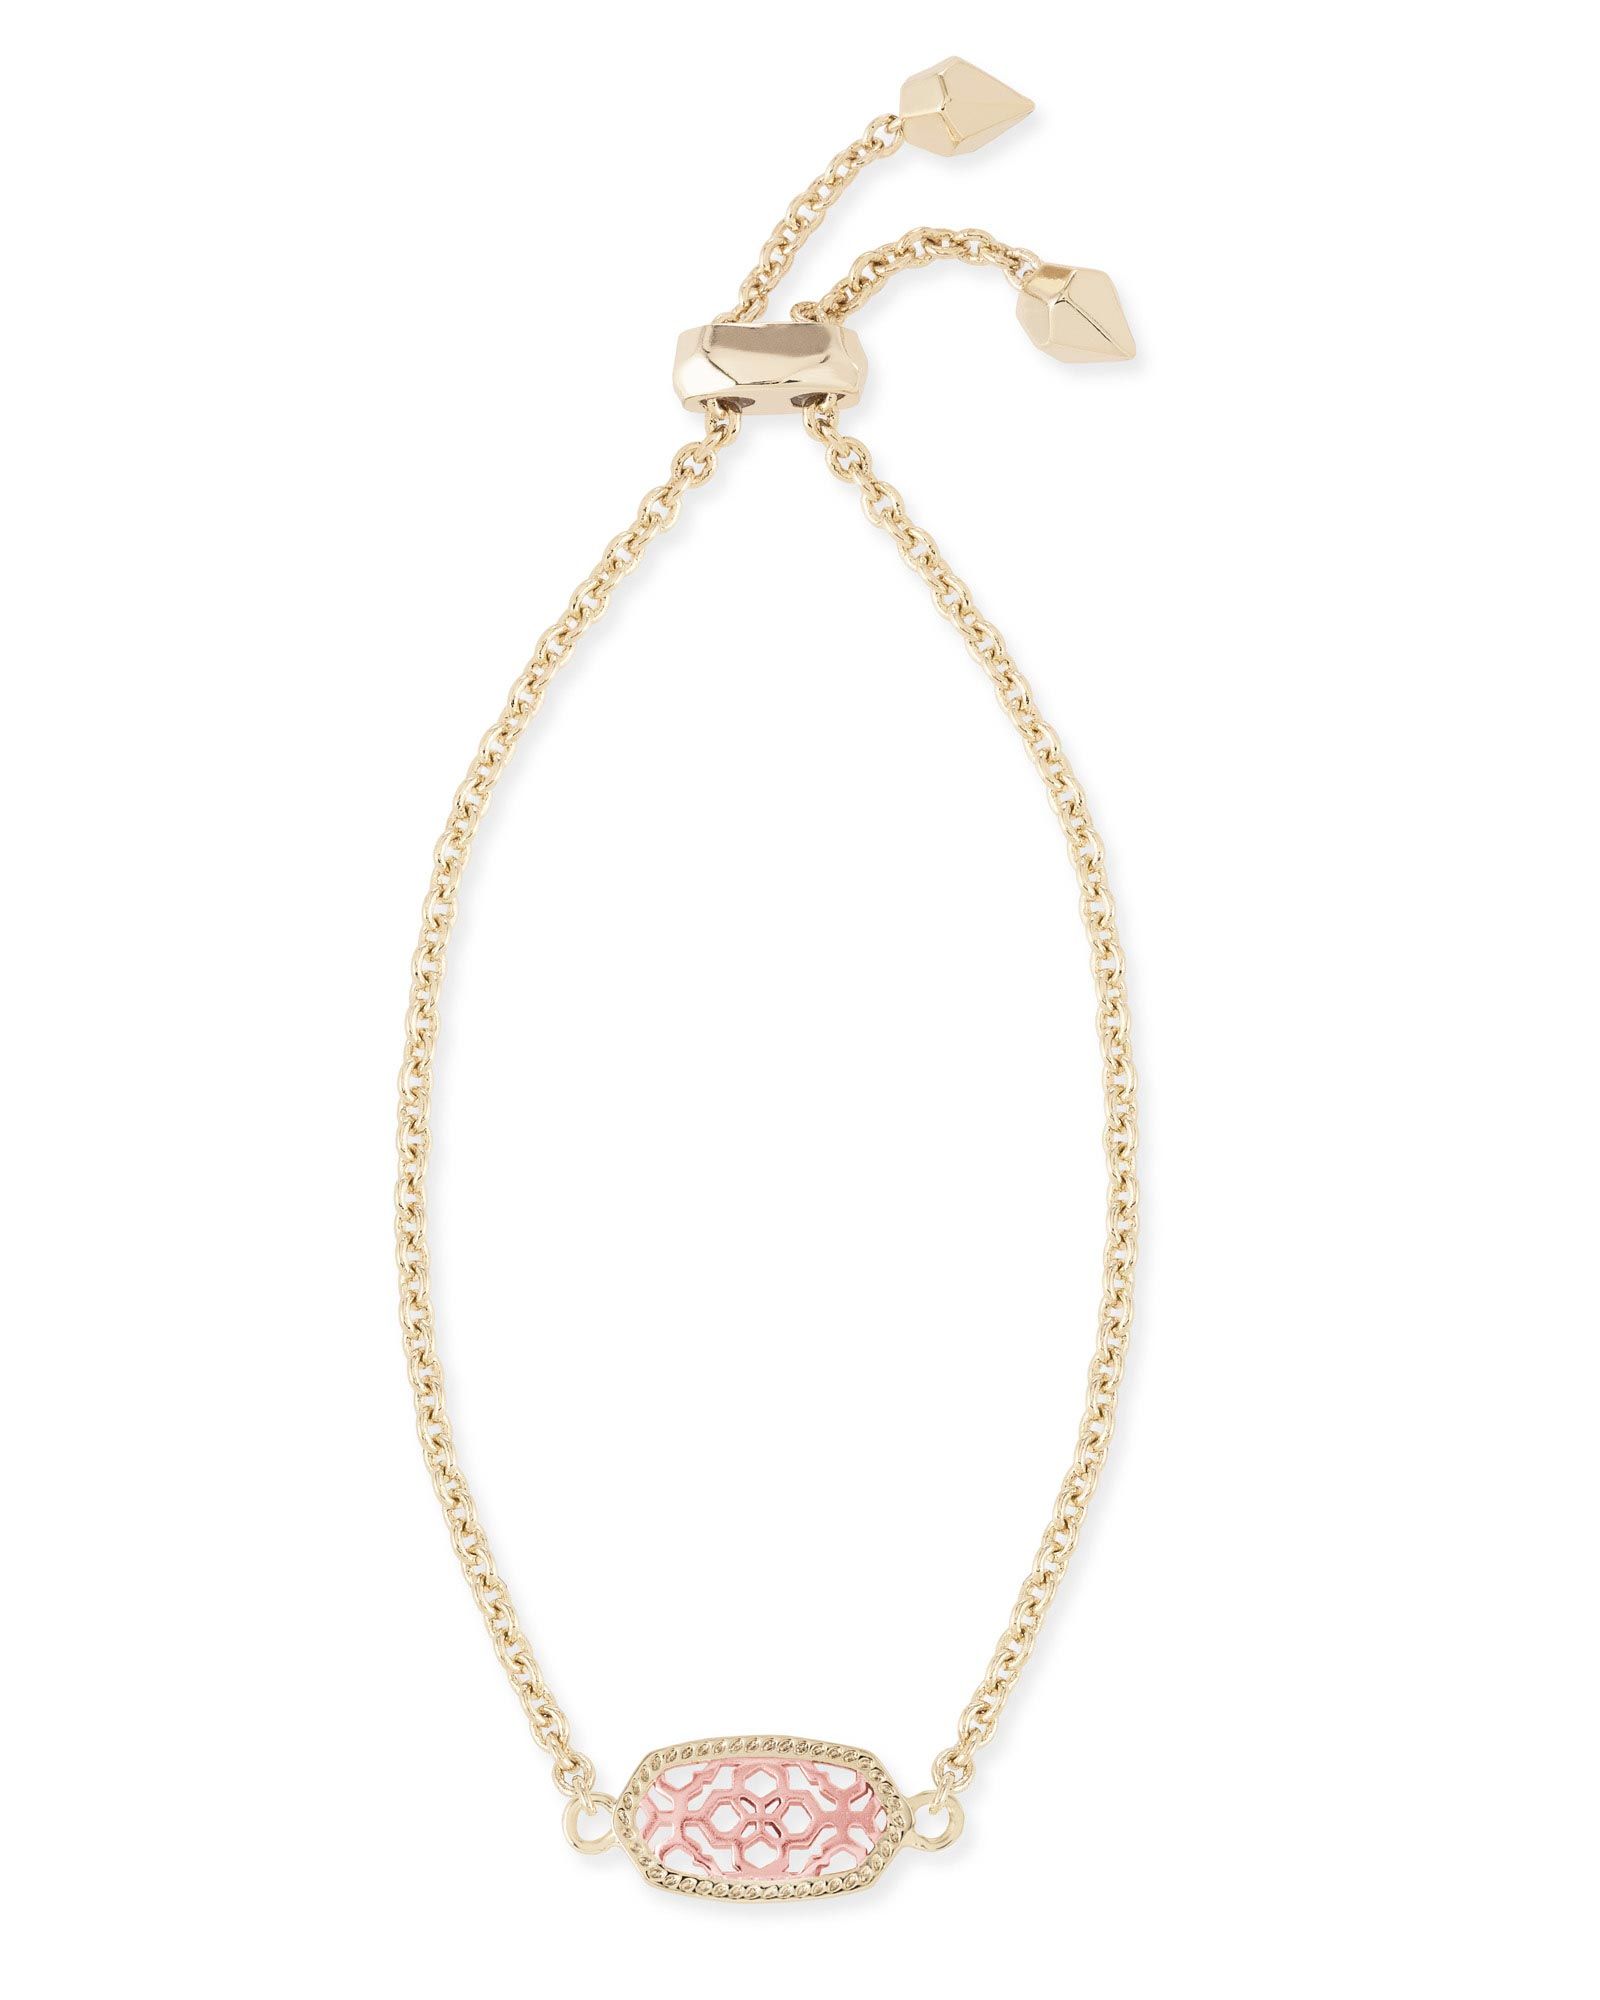 Elaina Gold Adjustable Chain Bracelet in Rose Gold Filigree | Kendra Scott